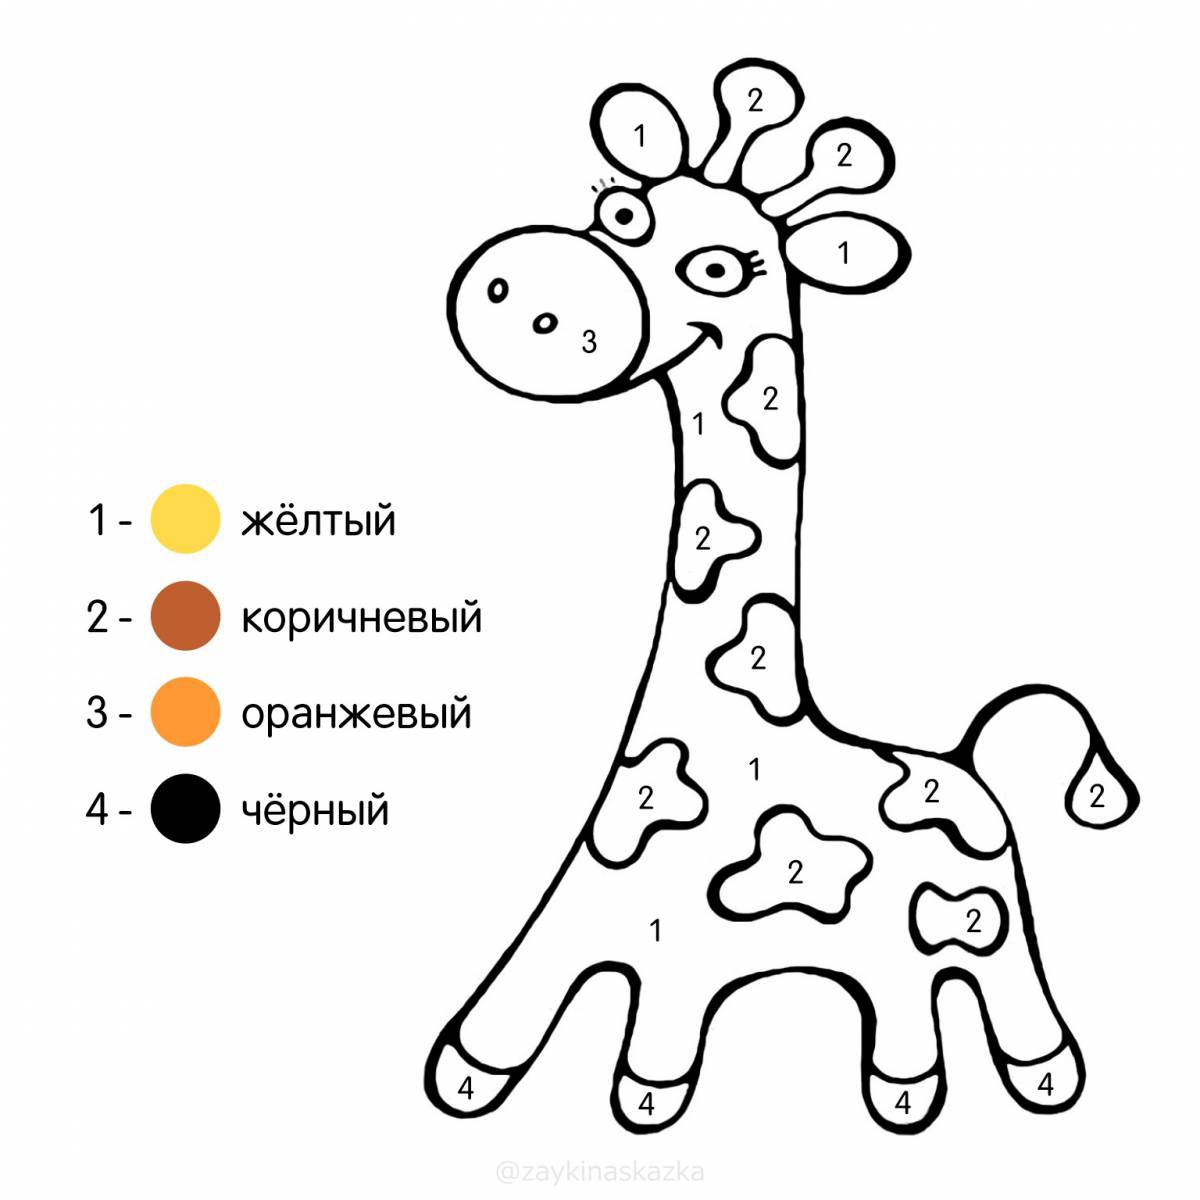 Happy giraffe coloring book for kids